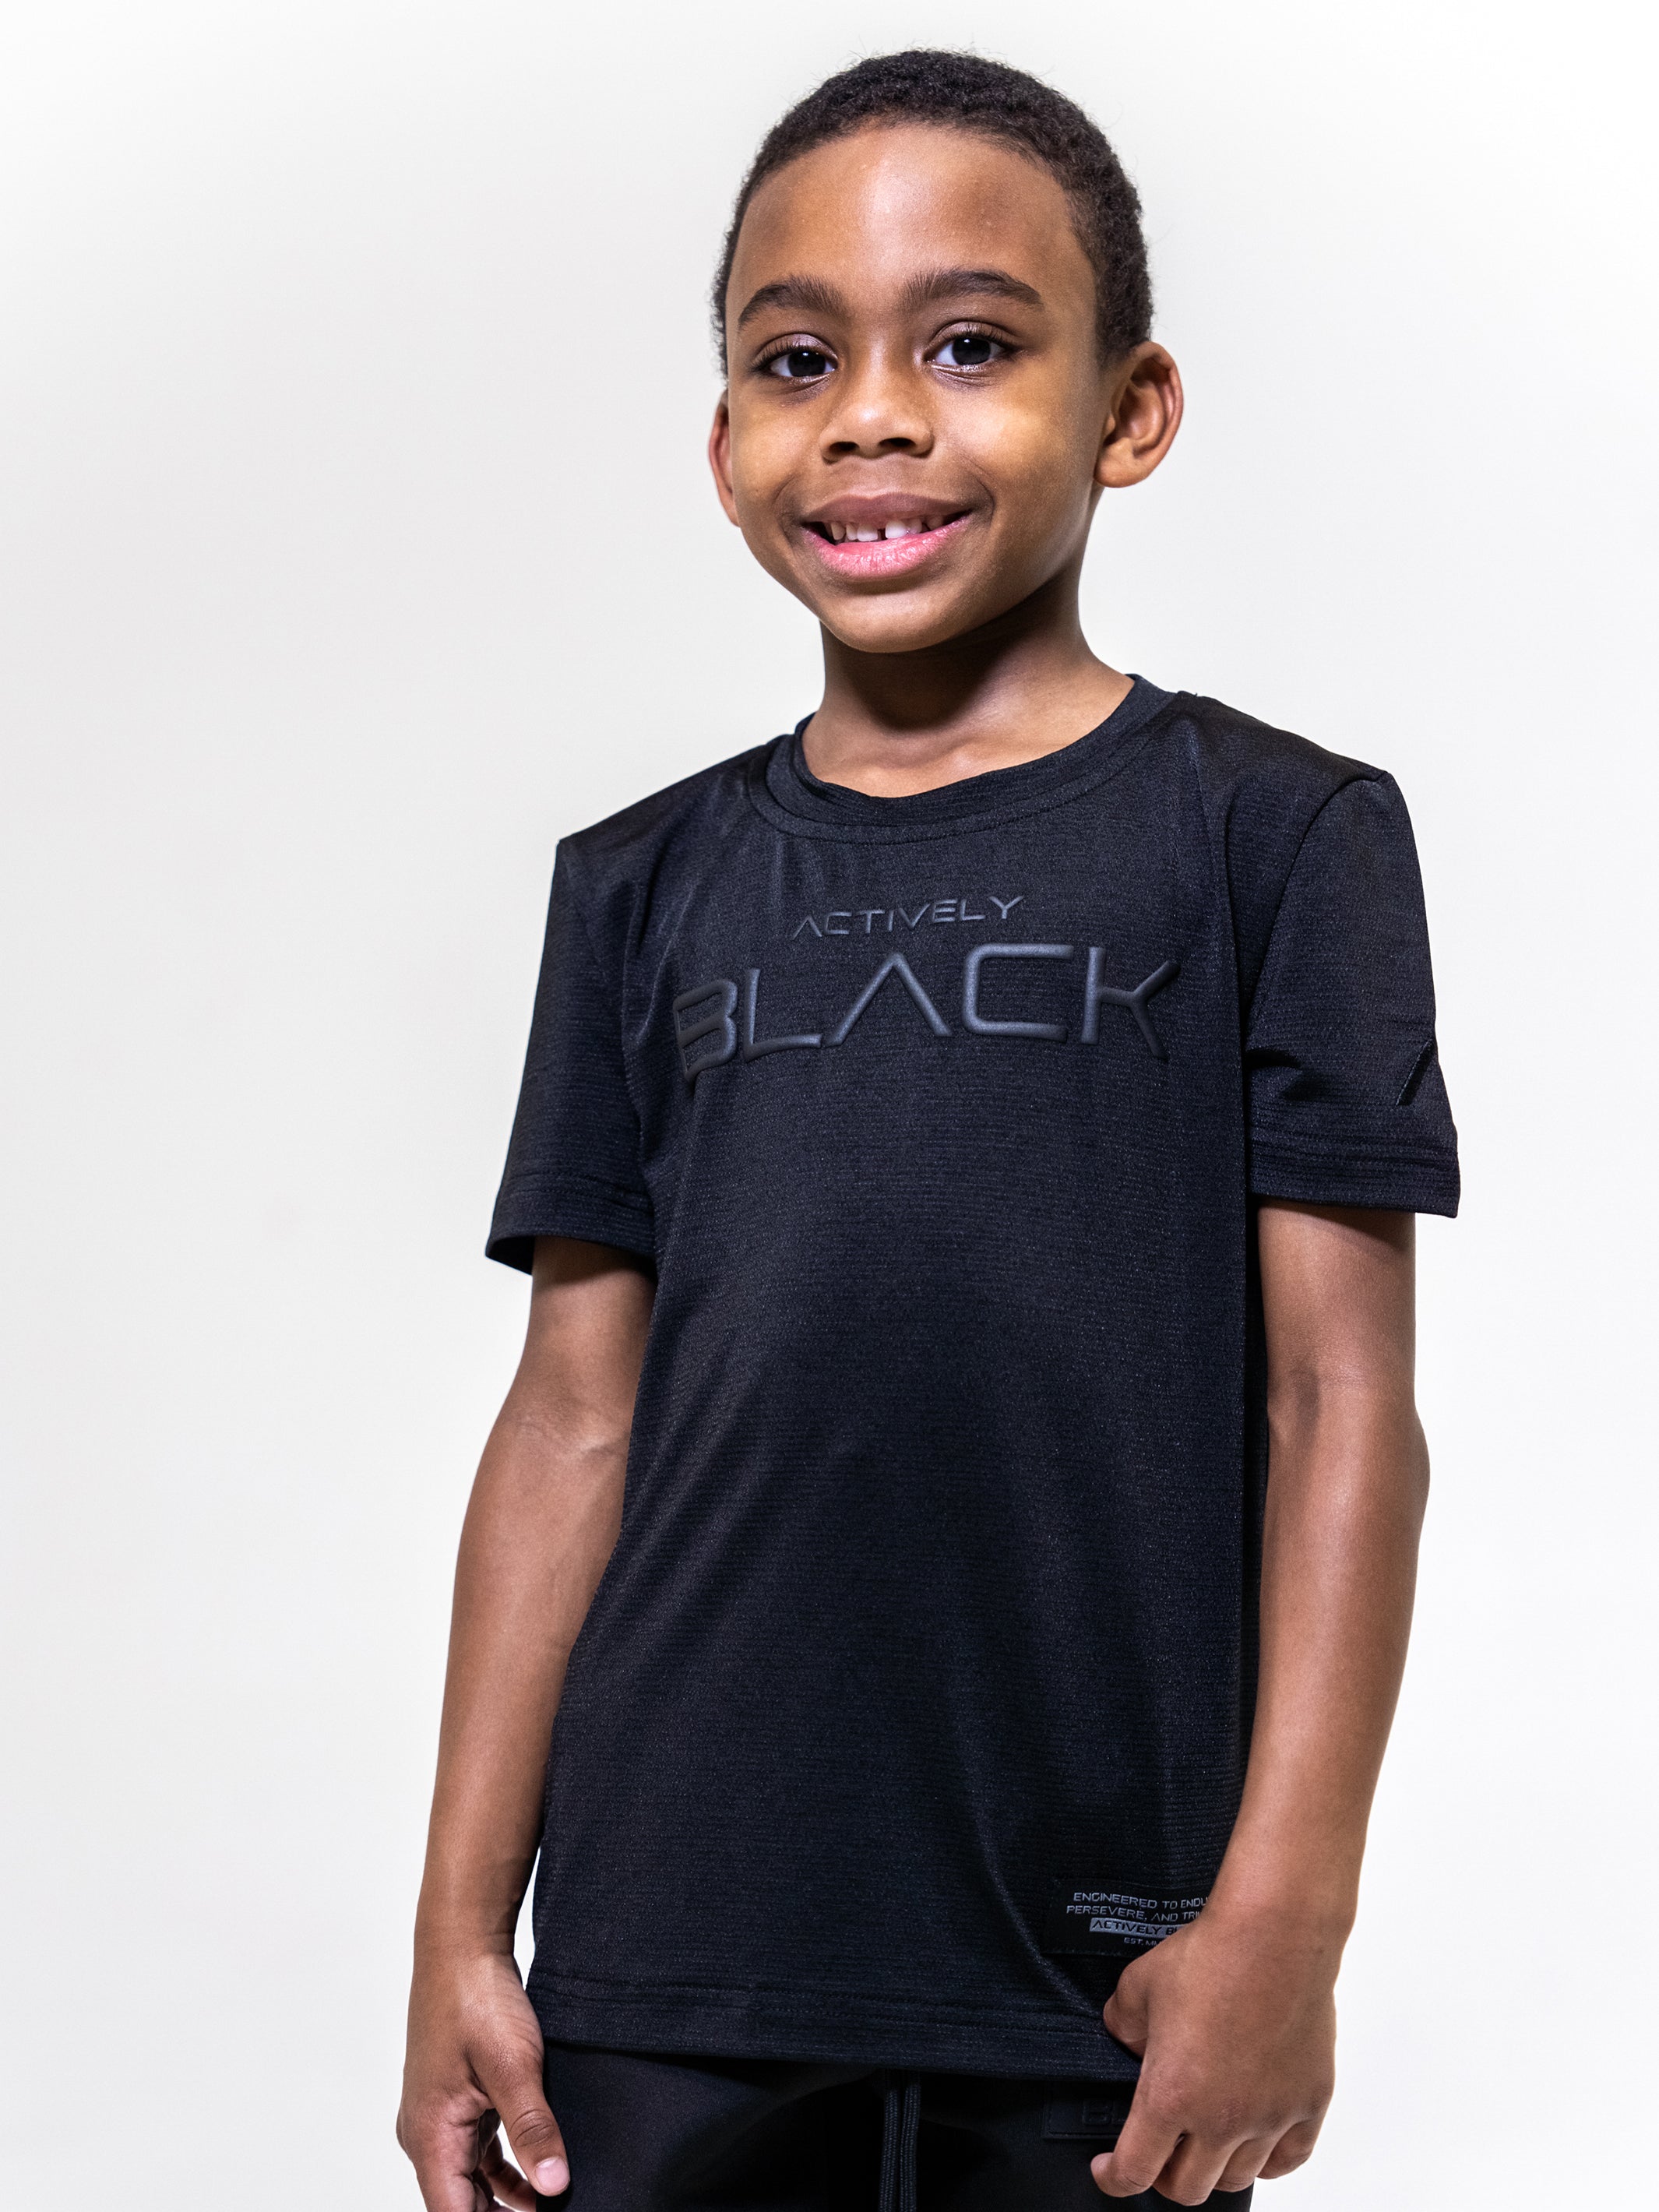 Kids Actively Black Performance Shirt